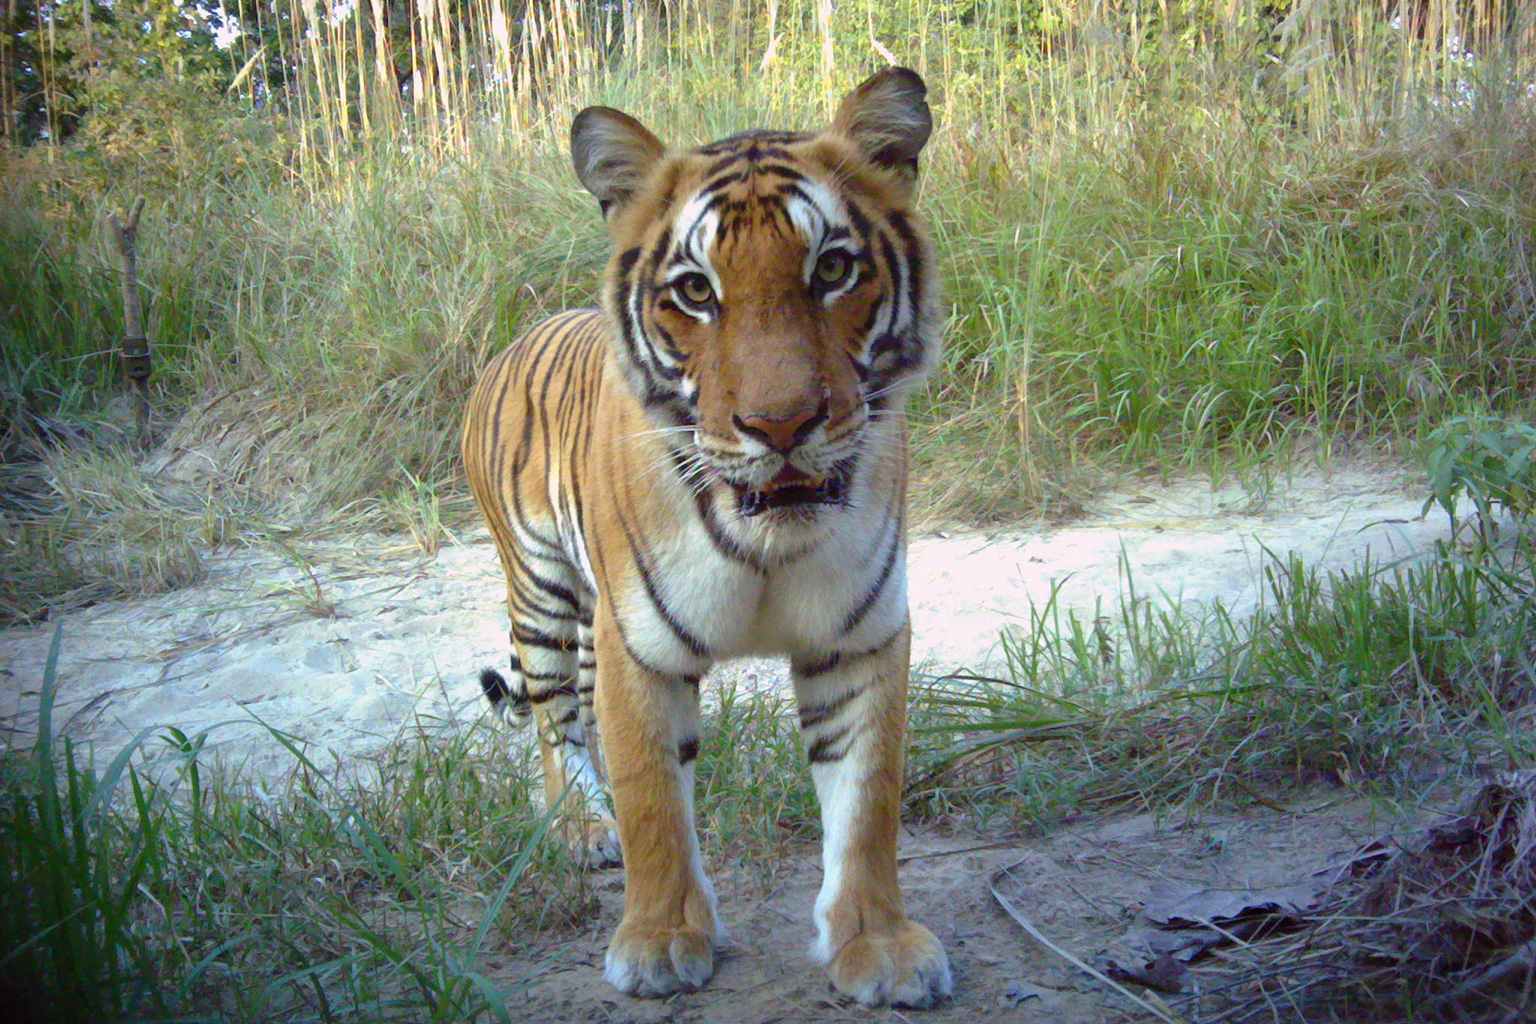 Tiger in Nepal. Photo credit: DNPWC/NTNC/Panthera/WWF/ZSL